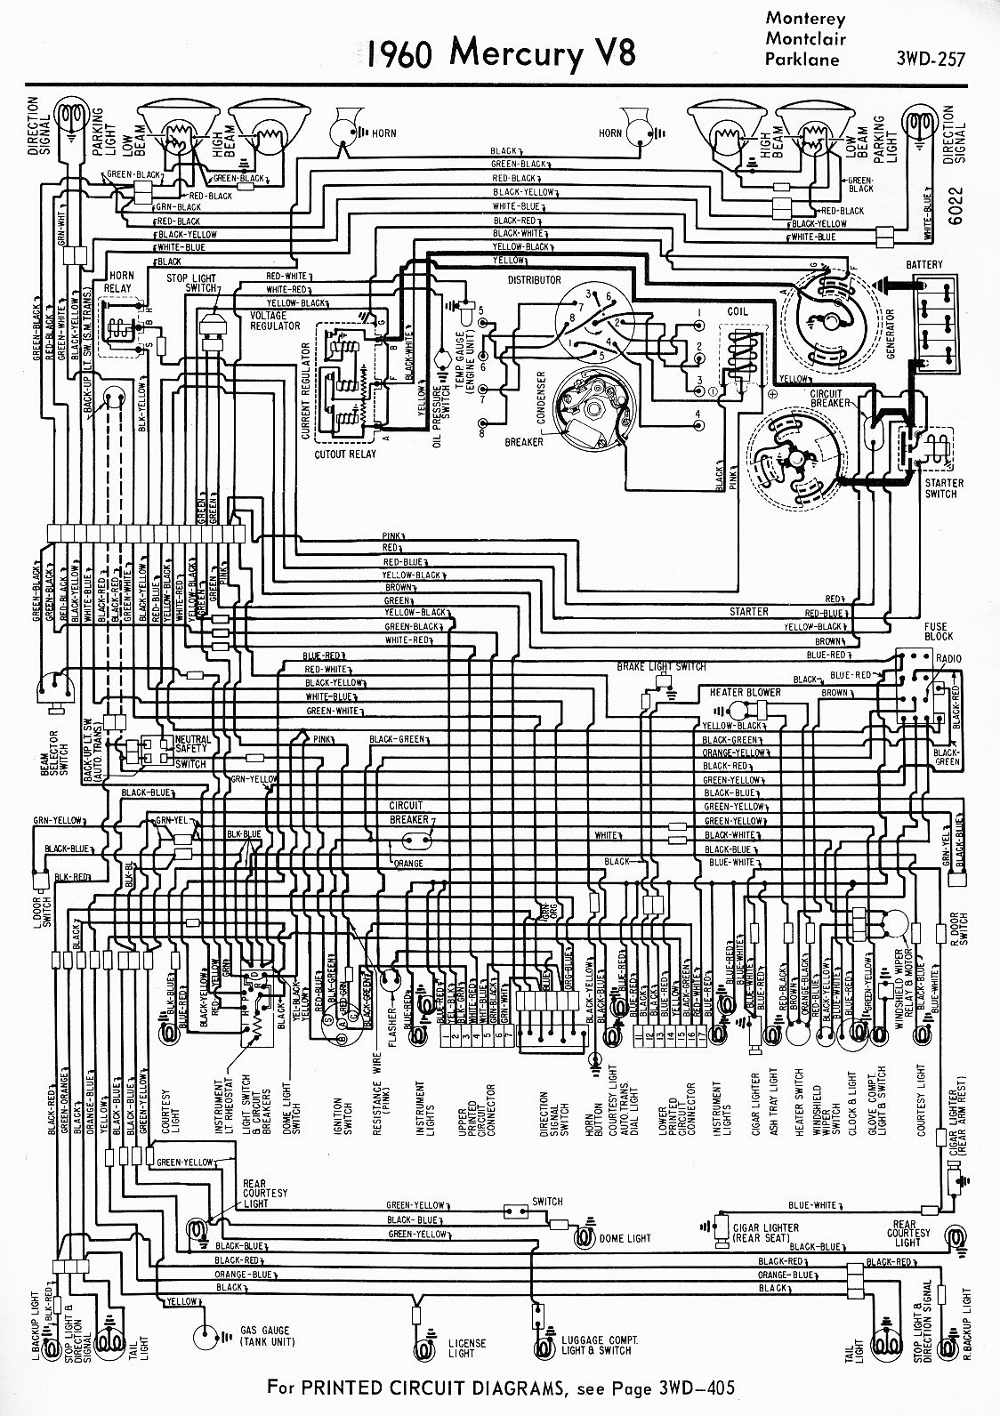 MERCURY - Car PDF Manual, Wiring Diagram & Fault Codes DTC